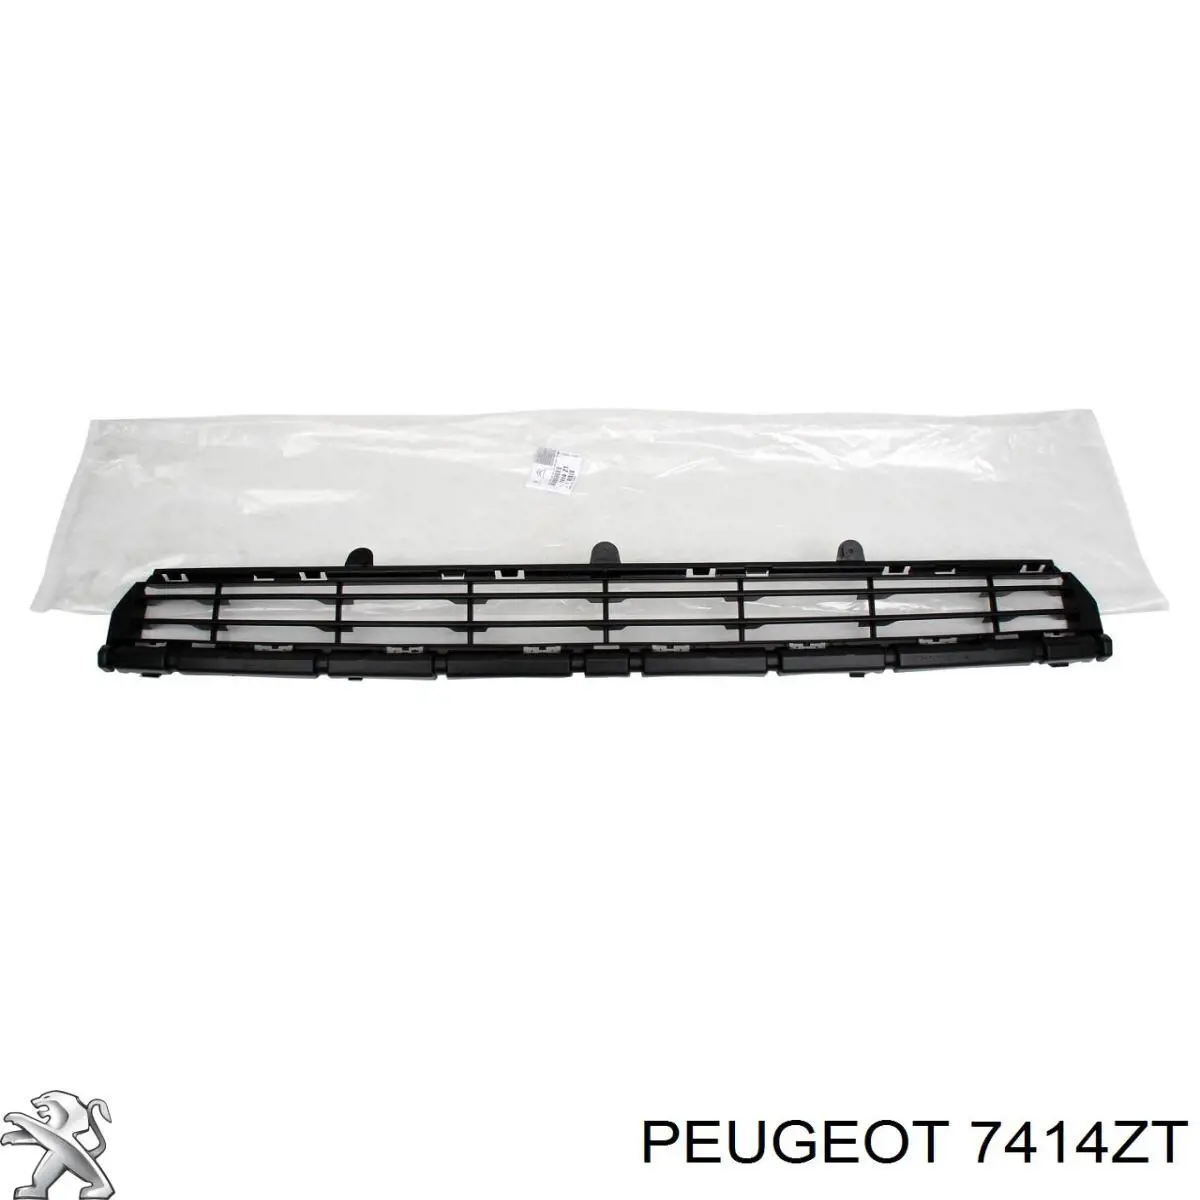 7414ZT Peugeot/Citroen rejilla de ventilación, parachoques delantero, superior